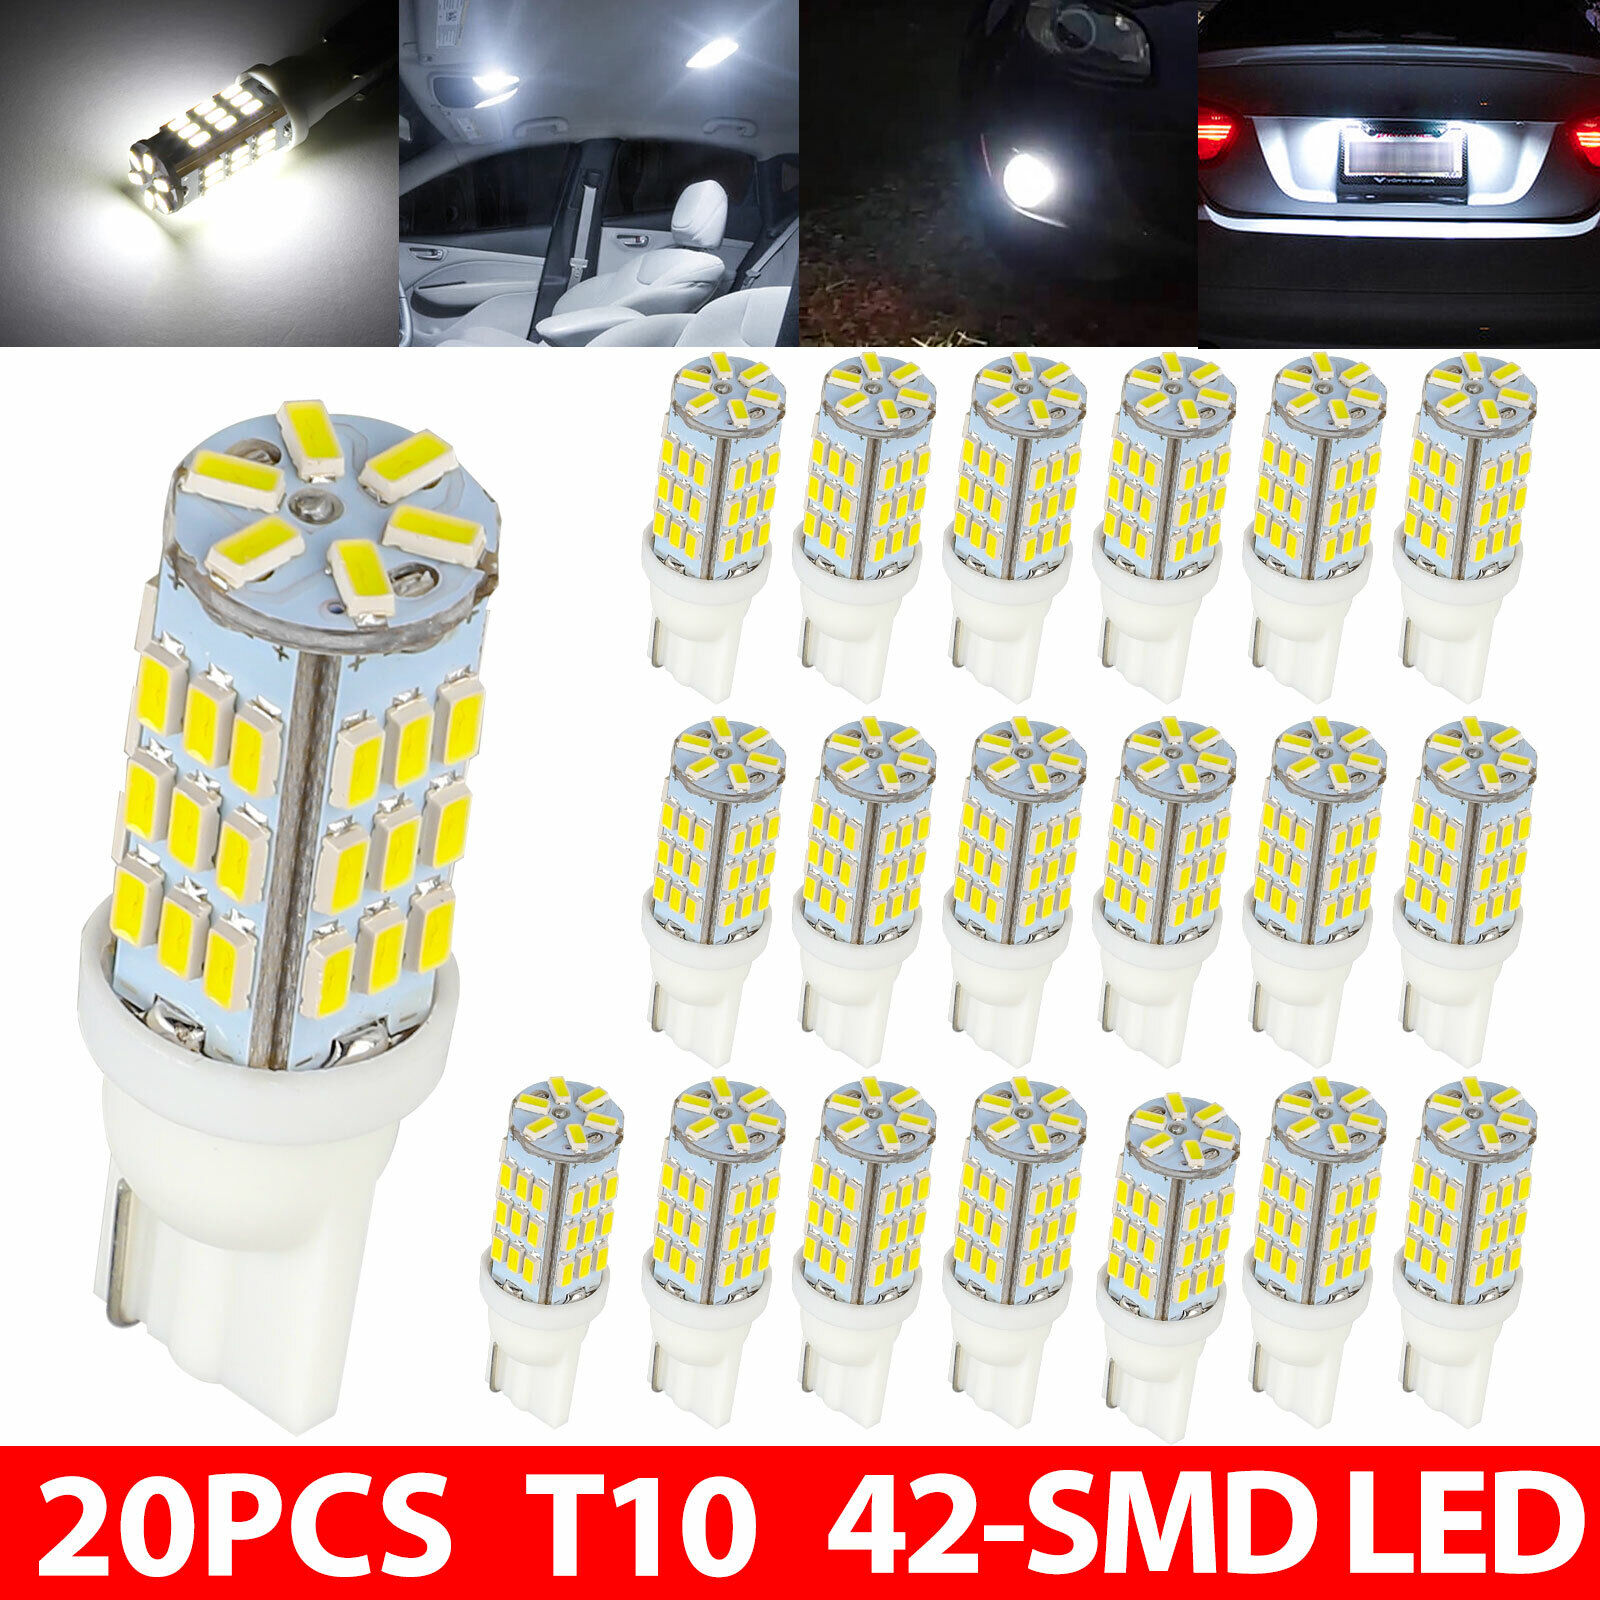 20PCS T10/921/194 42-SMD LED RV Trailer Backup Reverse Parking Light Bulbs White